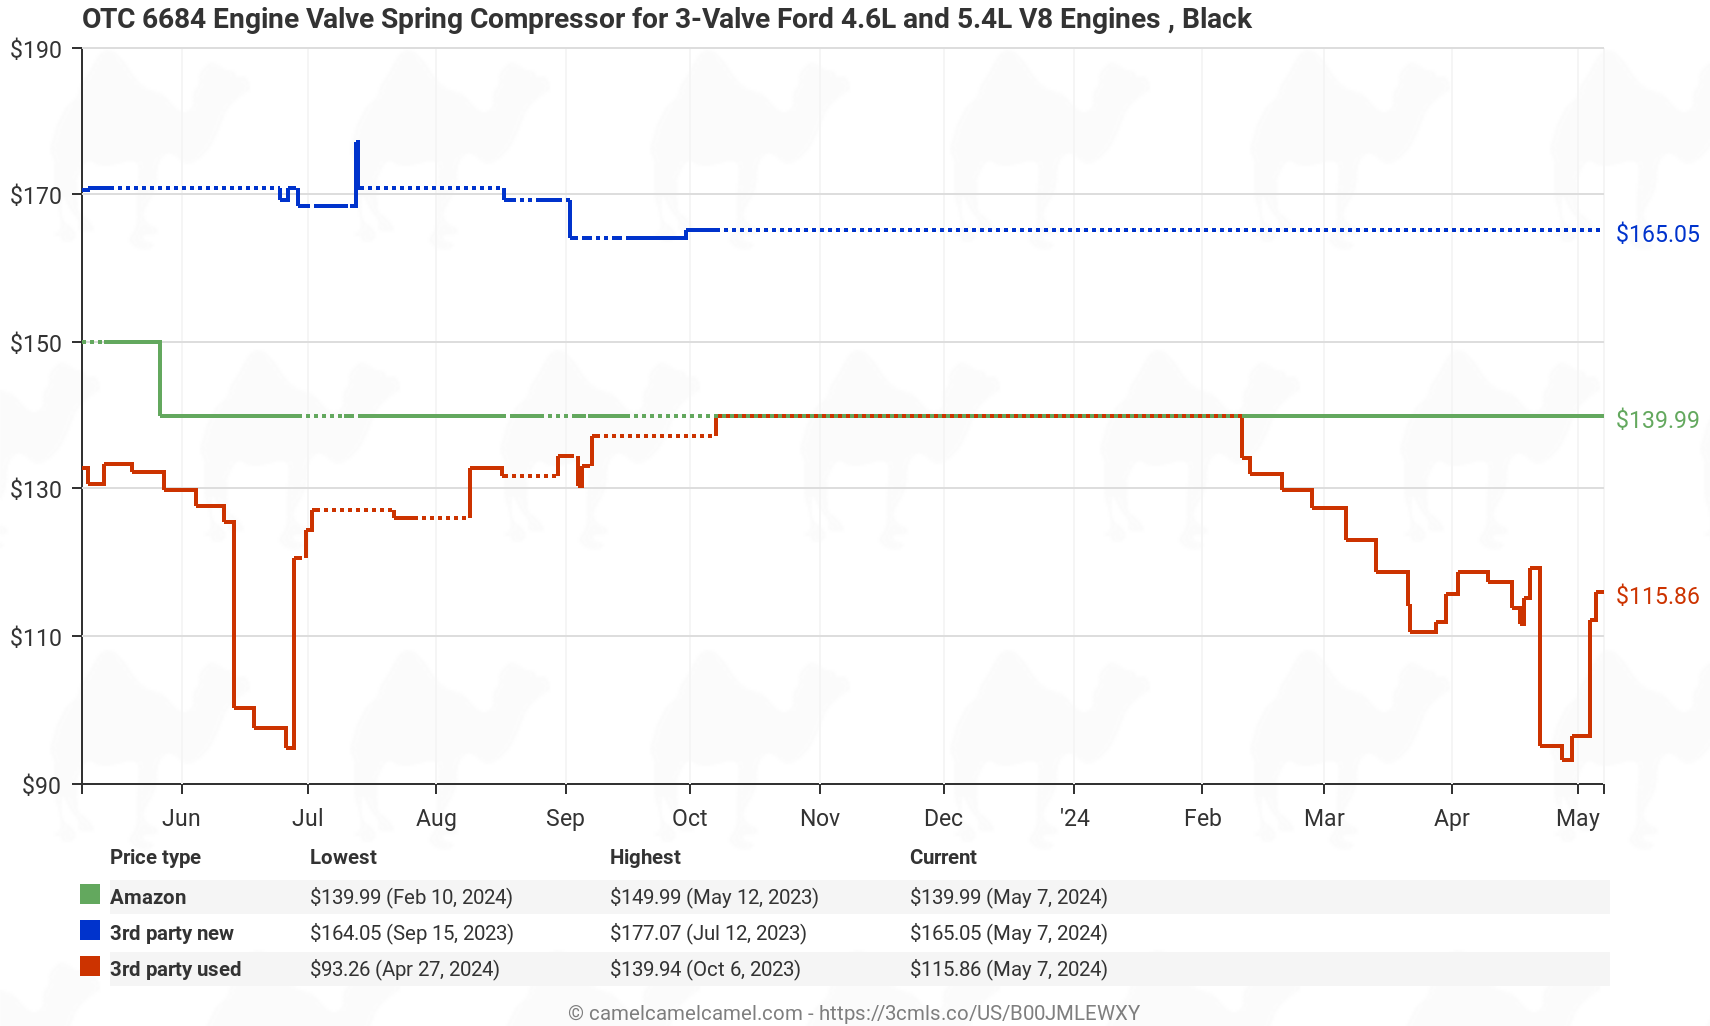 OTC 6684 Engine Valve Spring Compressor for 3-Valve Ford 4.6L and 5.4L V8 Engines , Black - Price History: B00JMLEWXY